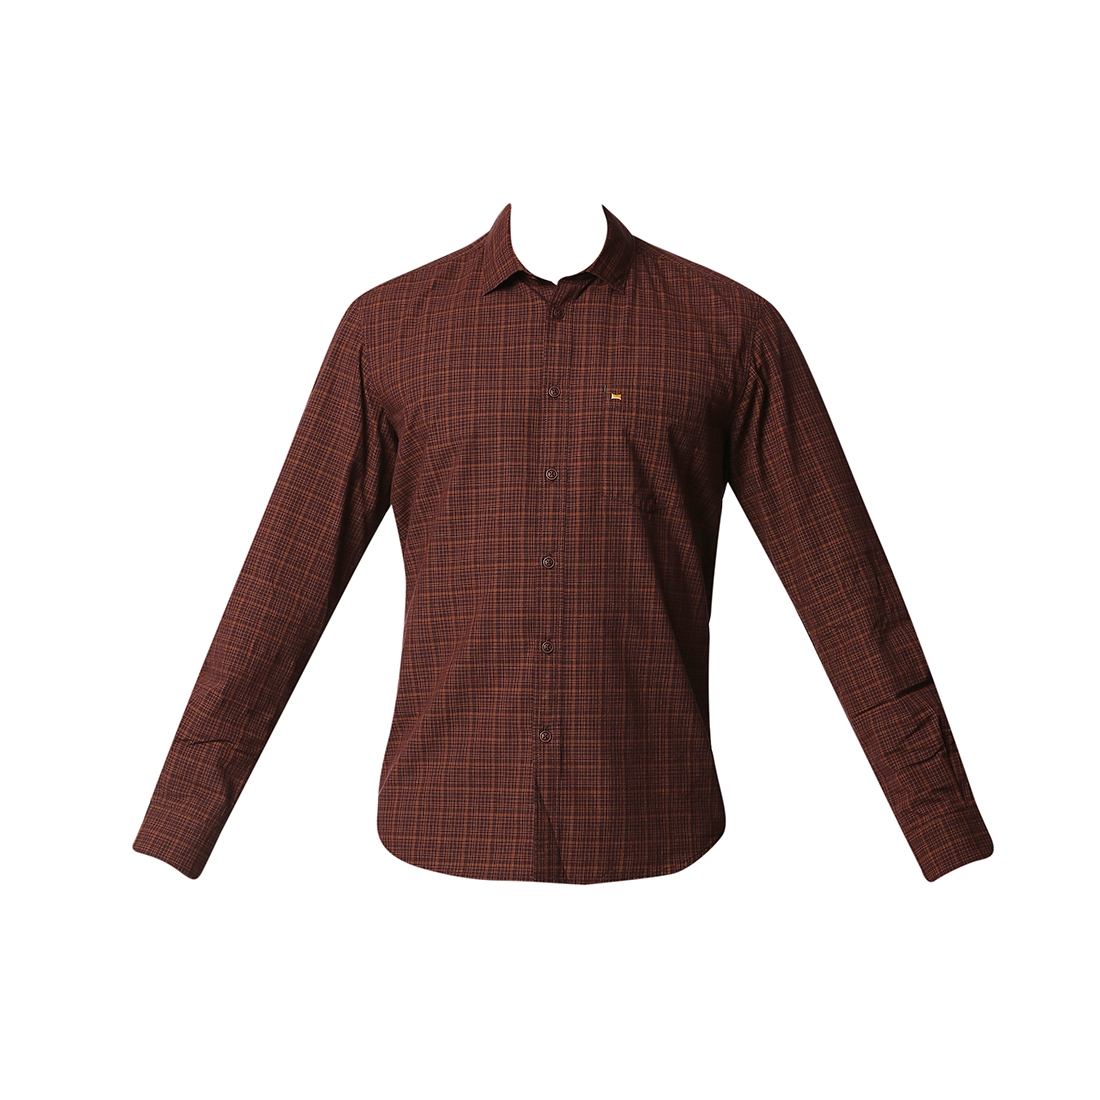 Basics | Men's Brown Cotton Checked Casual Shirt 5